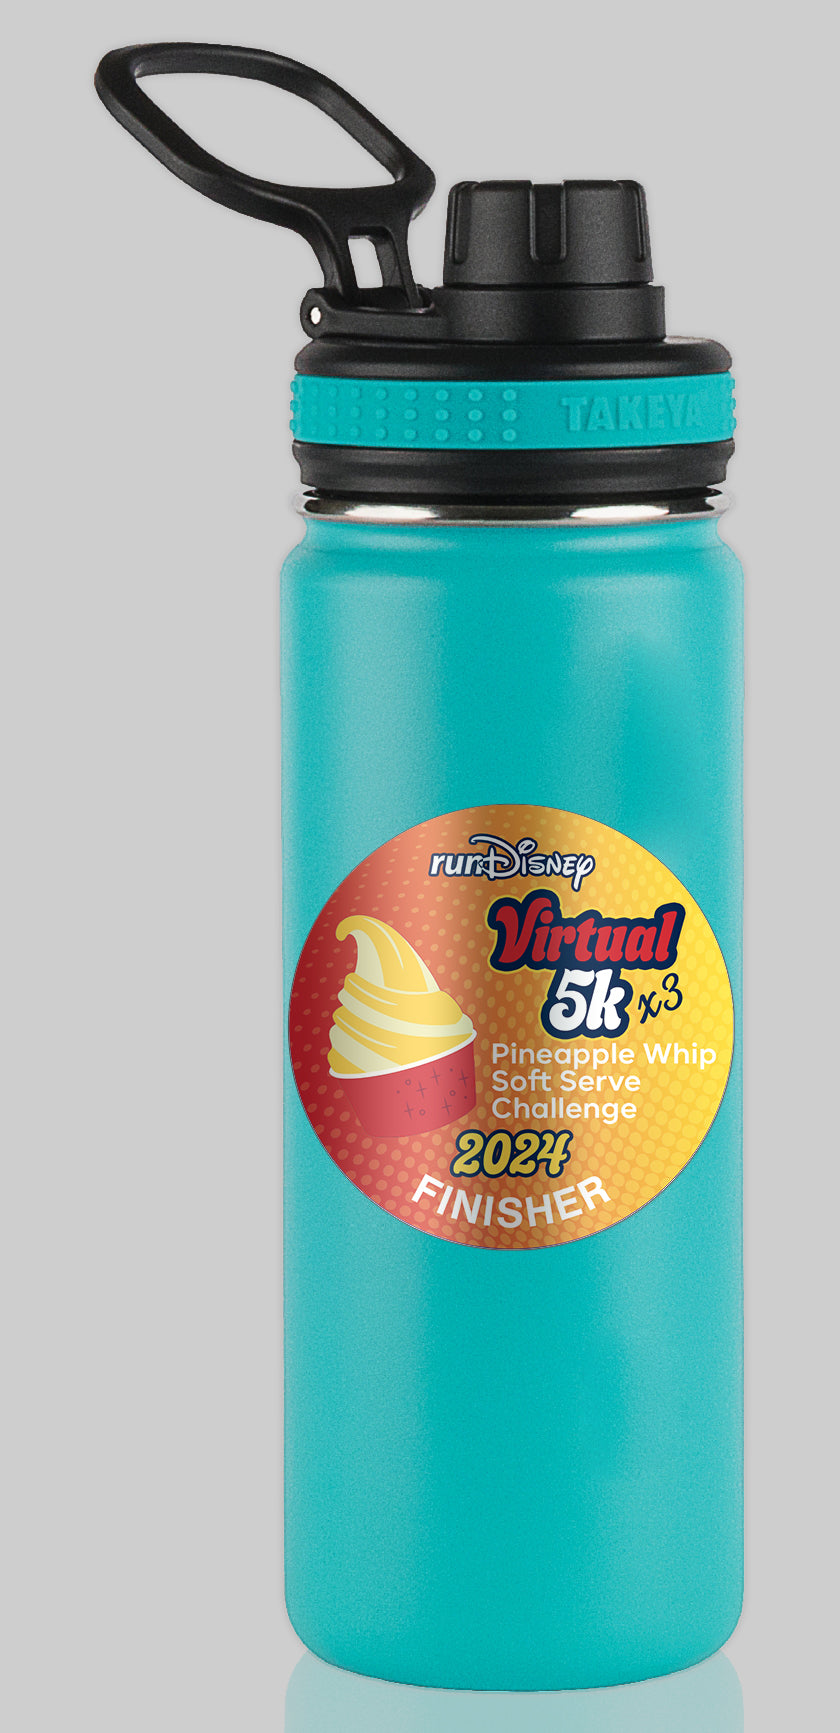 RunDisney Summer Virtual Series 2024 Pineapple Whip Soft Serve Challenge 5K x3 3.1 Miles FINISHER Water Bottle Mug Sticker